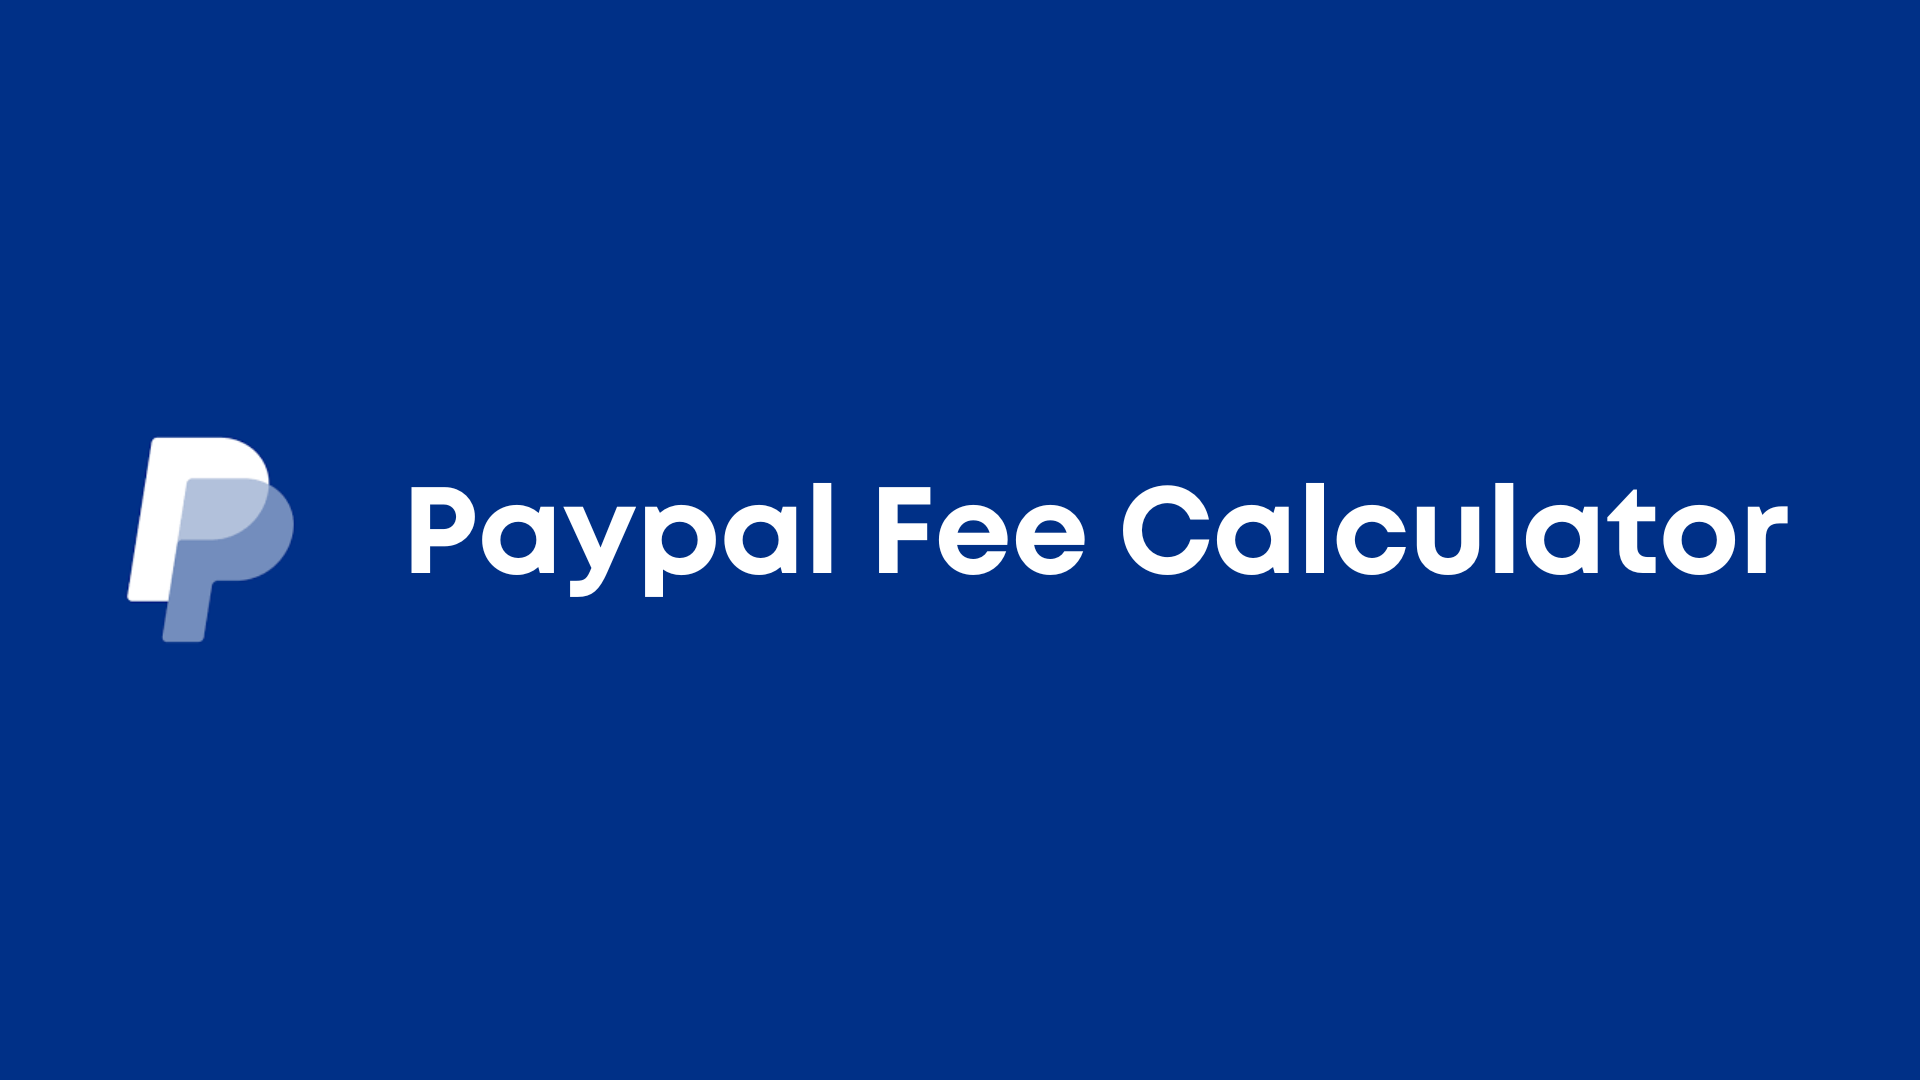 Paypal Fee Calculator